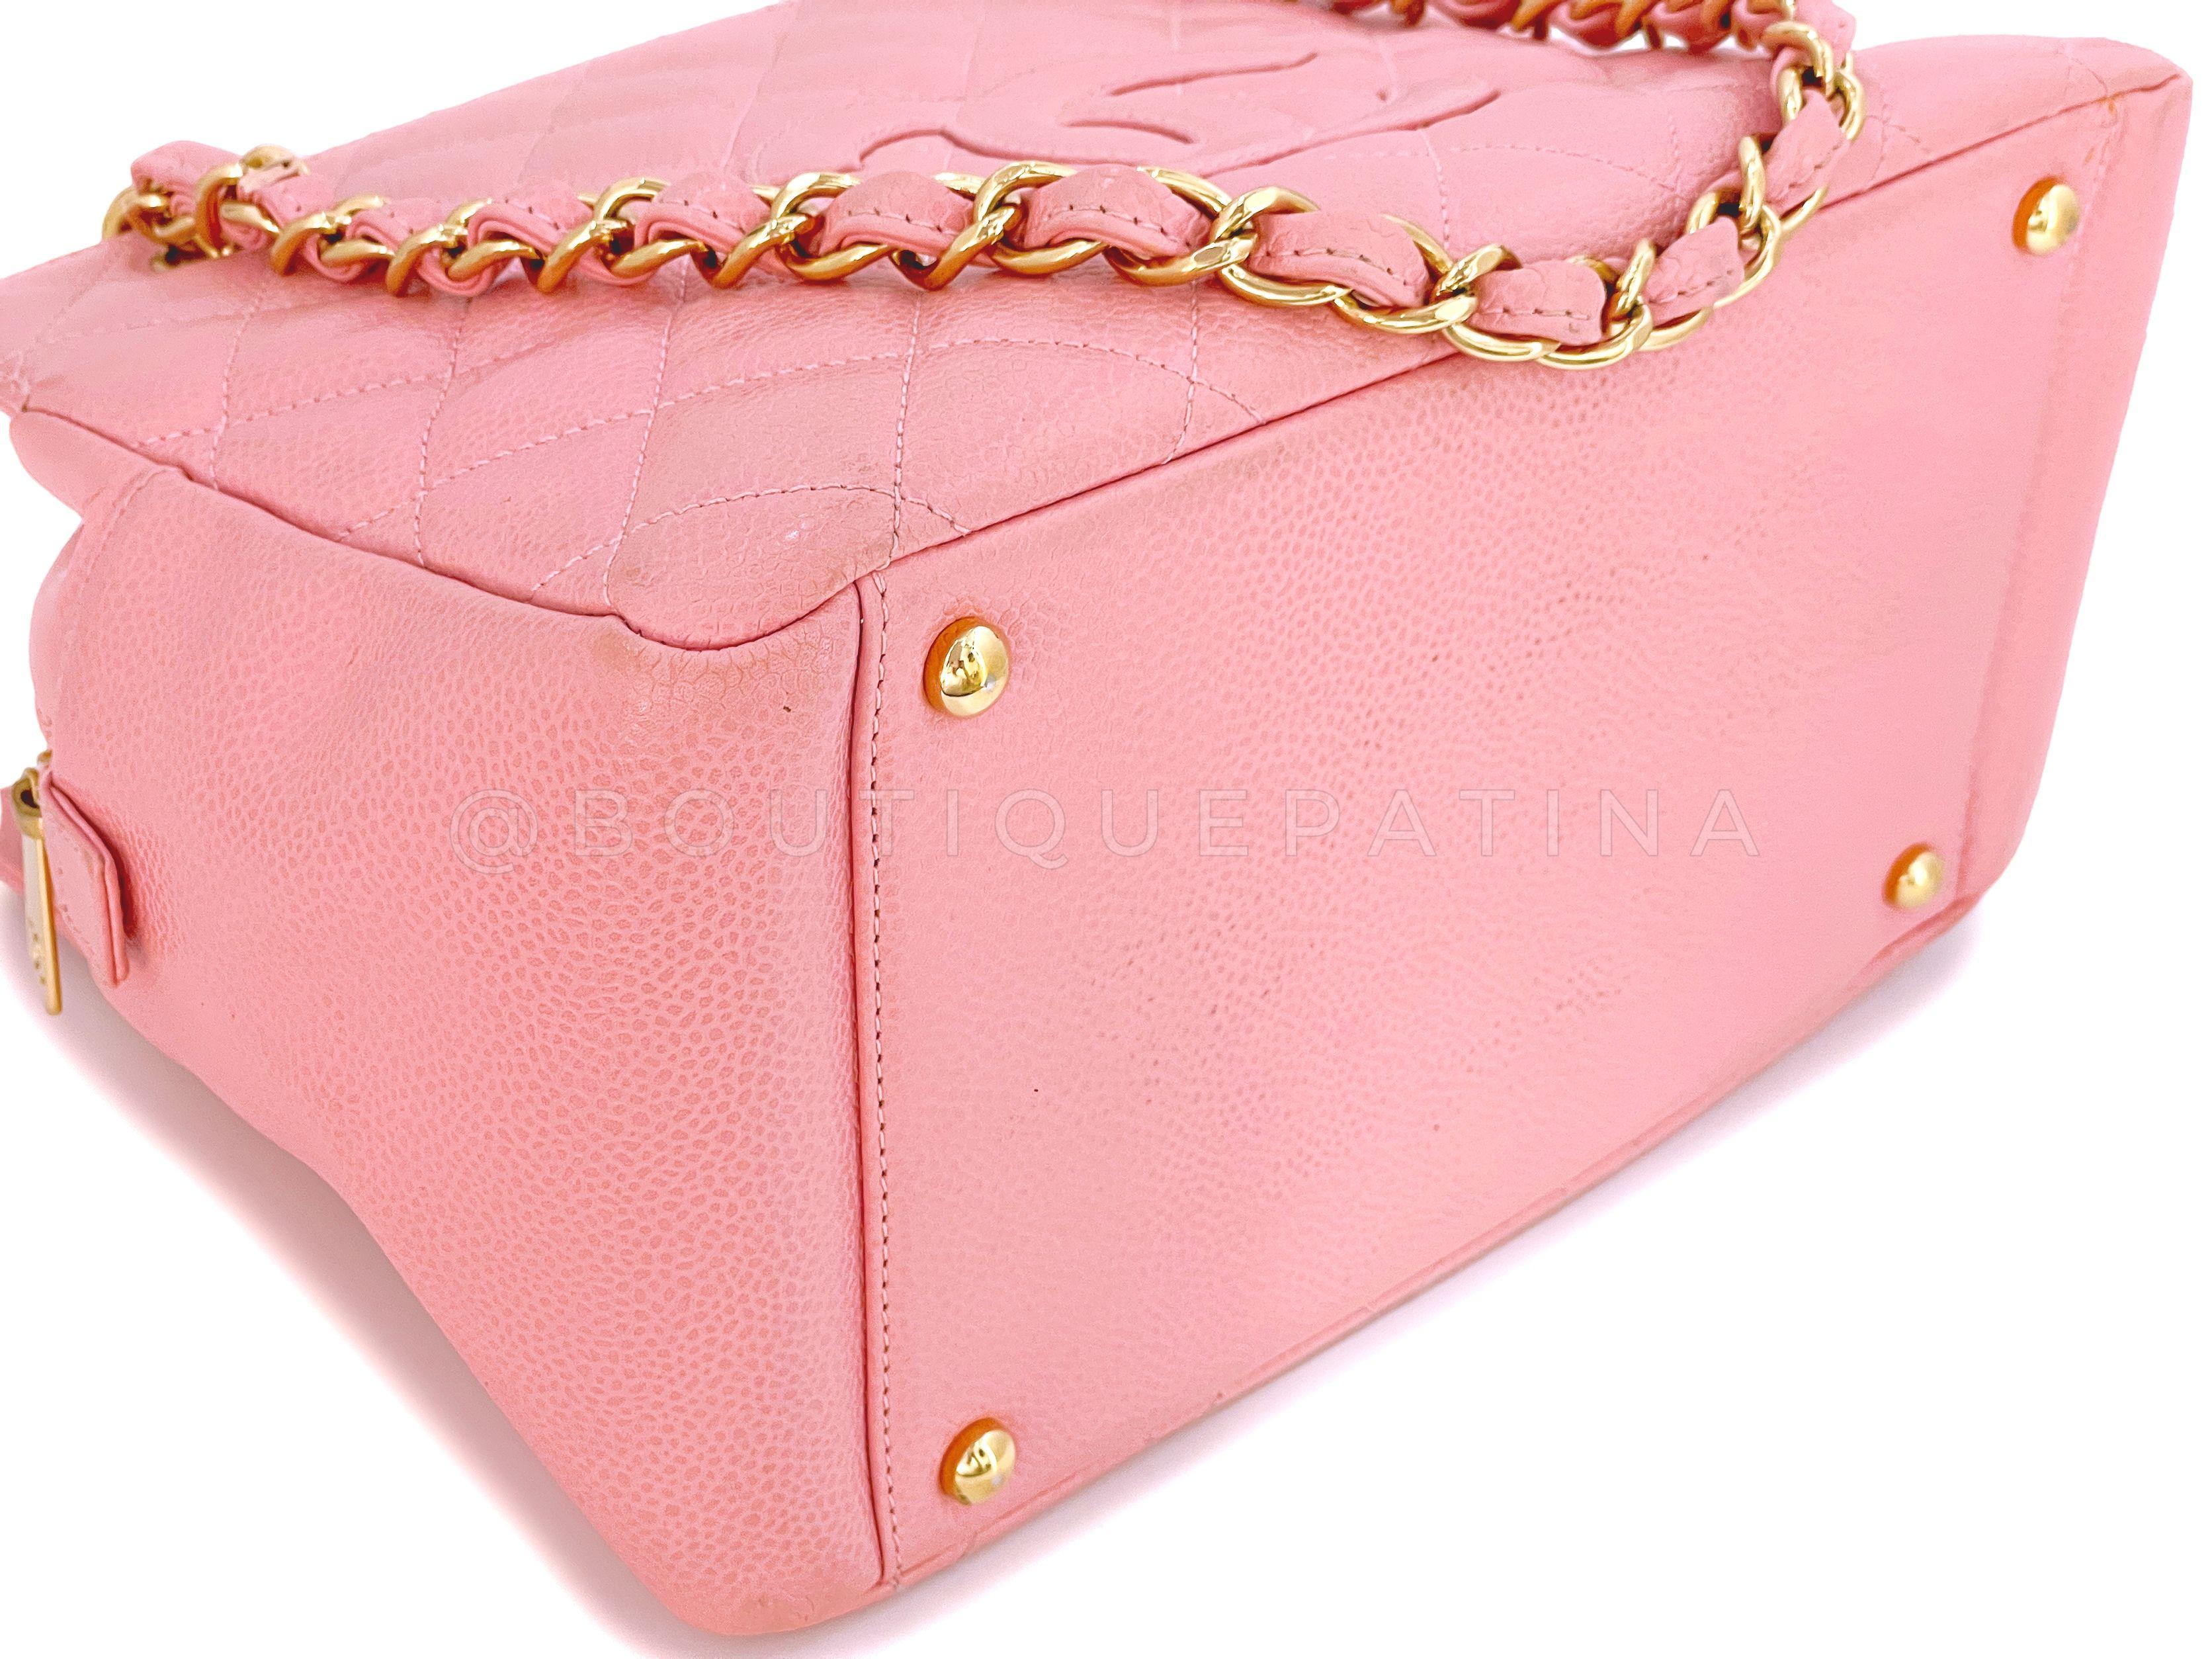 Chanel Pink Caviar Petite Timeless Shopper Tote PTT Bag 24k GHW 65400 2